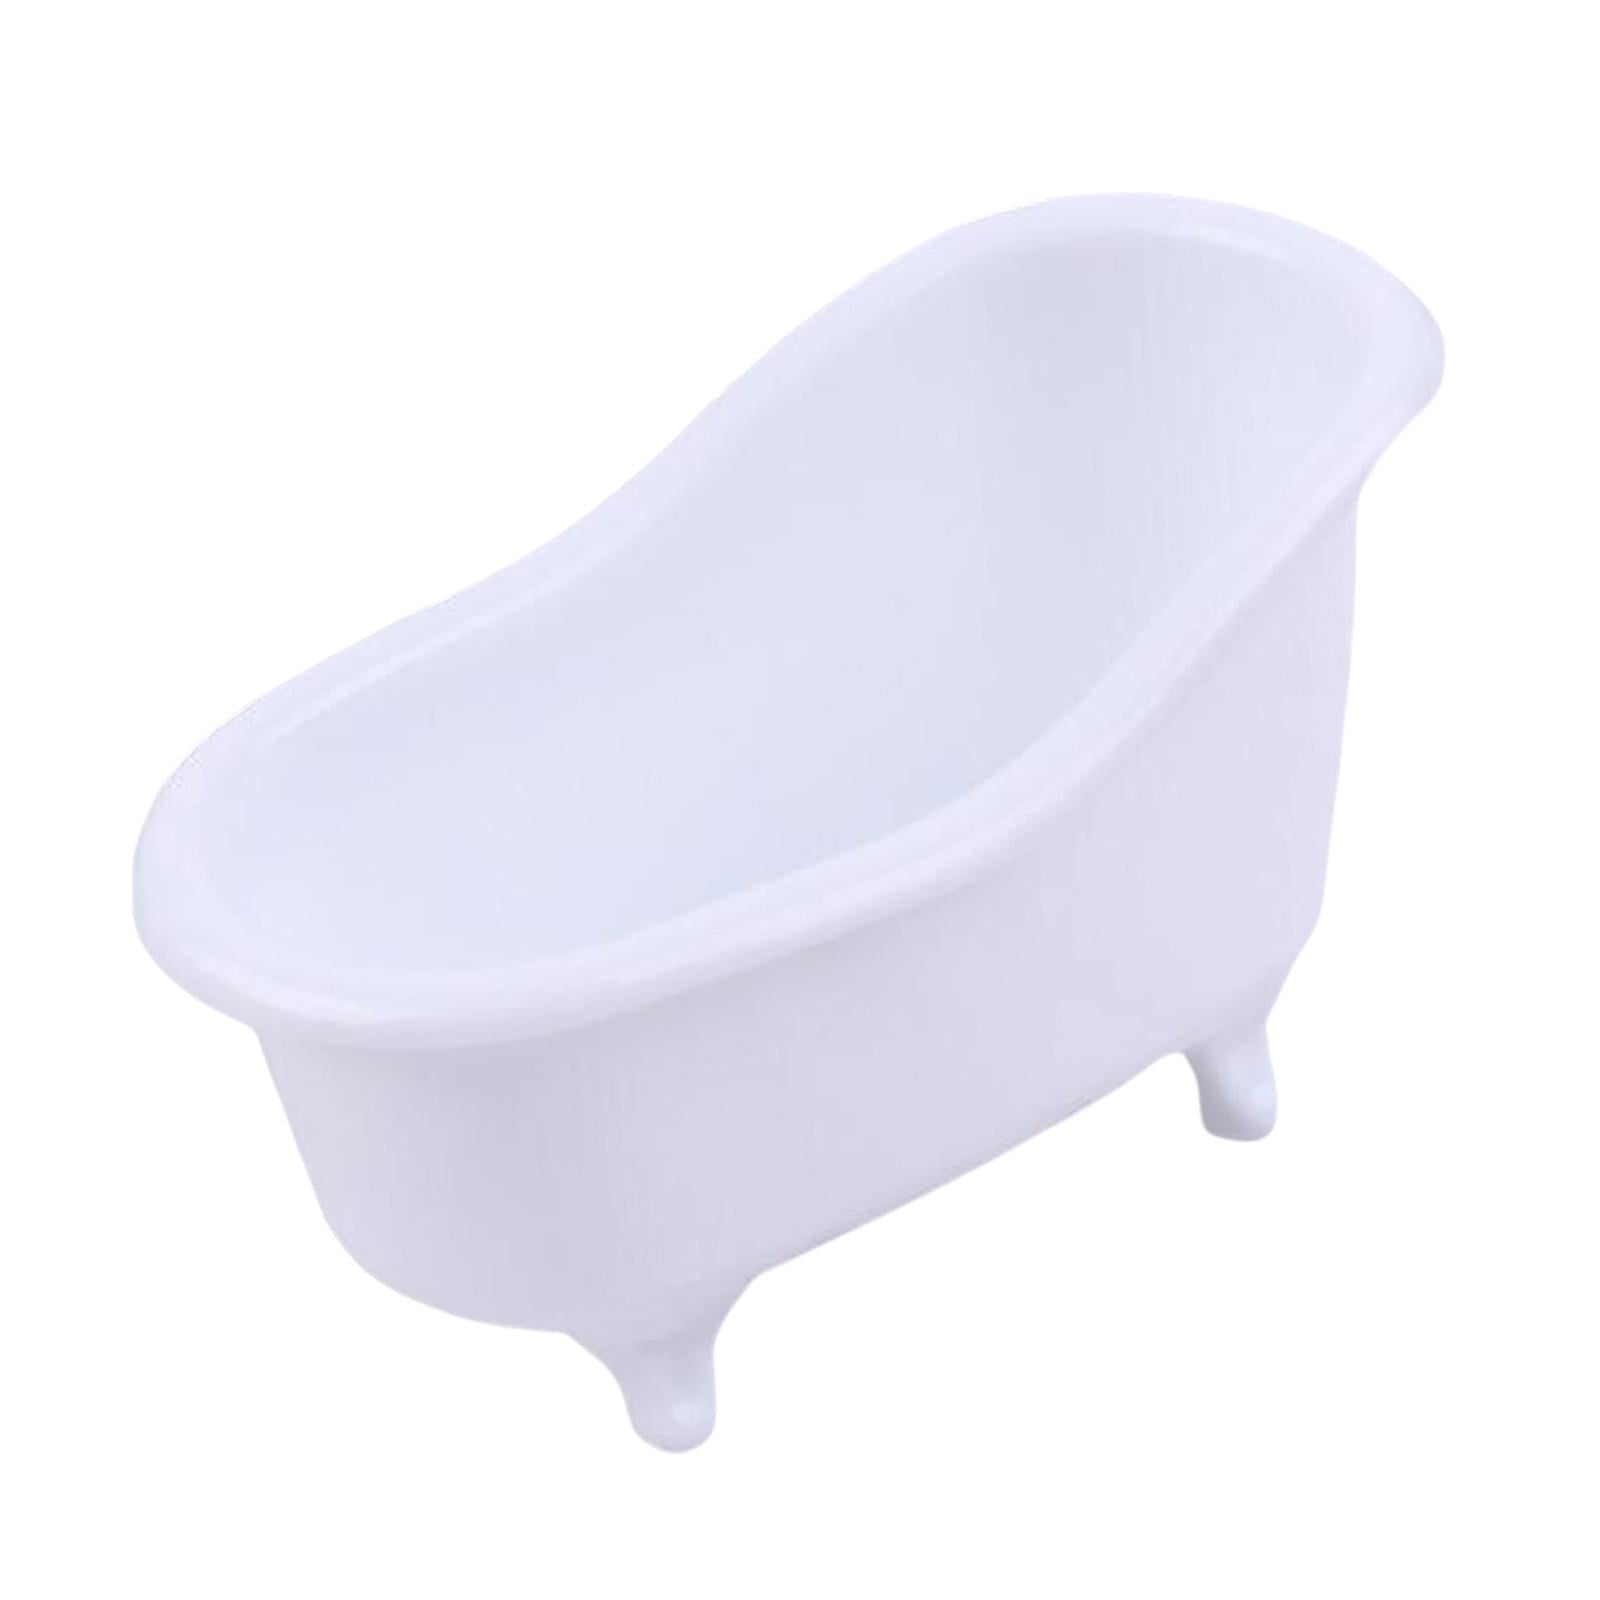 Mini Bathtub Organizer Box For Soap Shampoo, 5.7 X 9.4 X 4.2 Inches